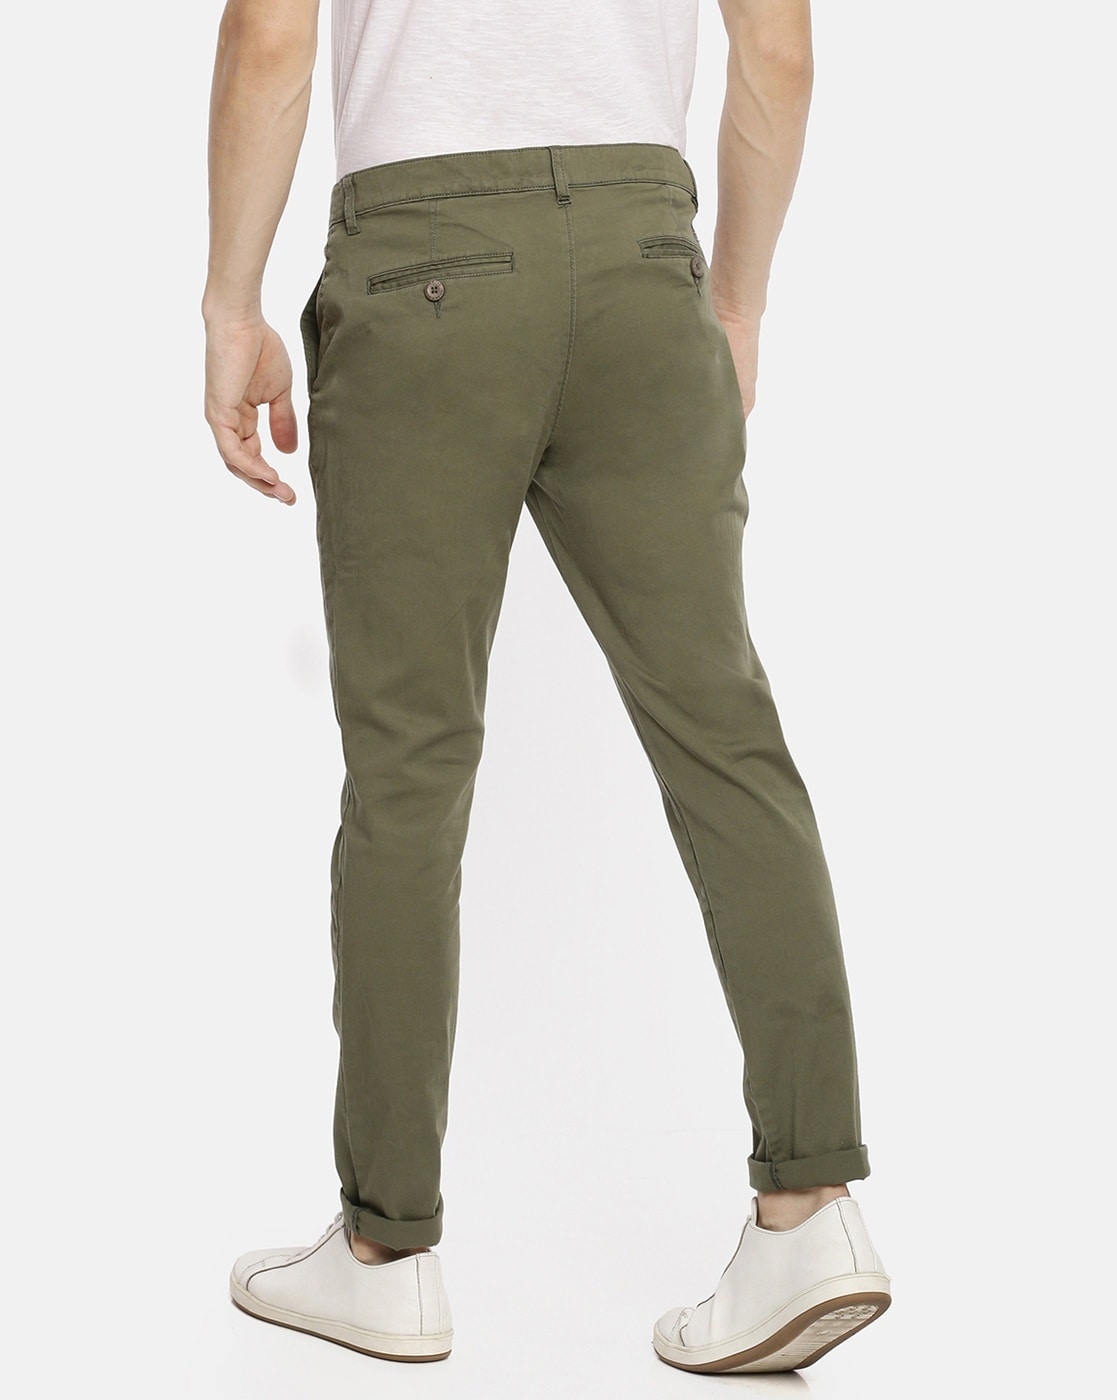 Twill Green Textured Premium TerryRayon Pant For Men